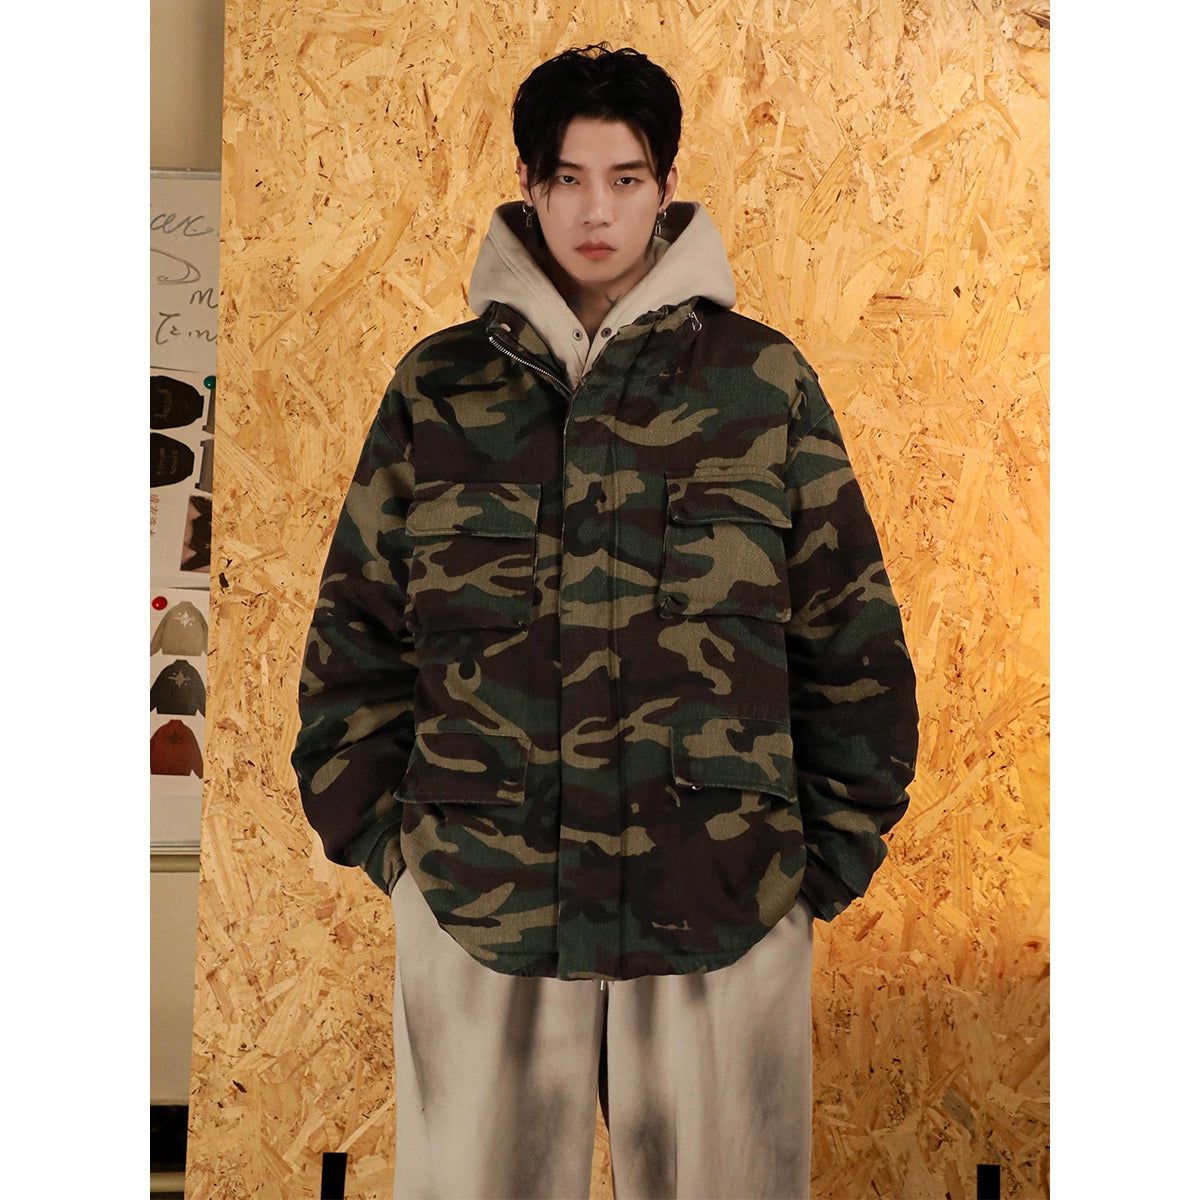 Multi-Pocket Camo Print Jacket Korean Street Fashion Jacket By Mr Nearly Shop Online at OH Vault